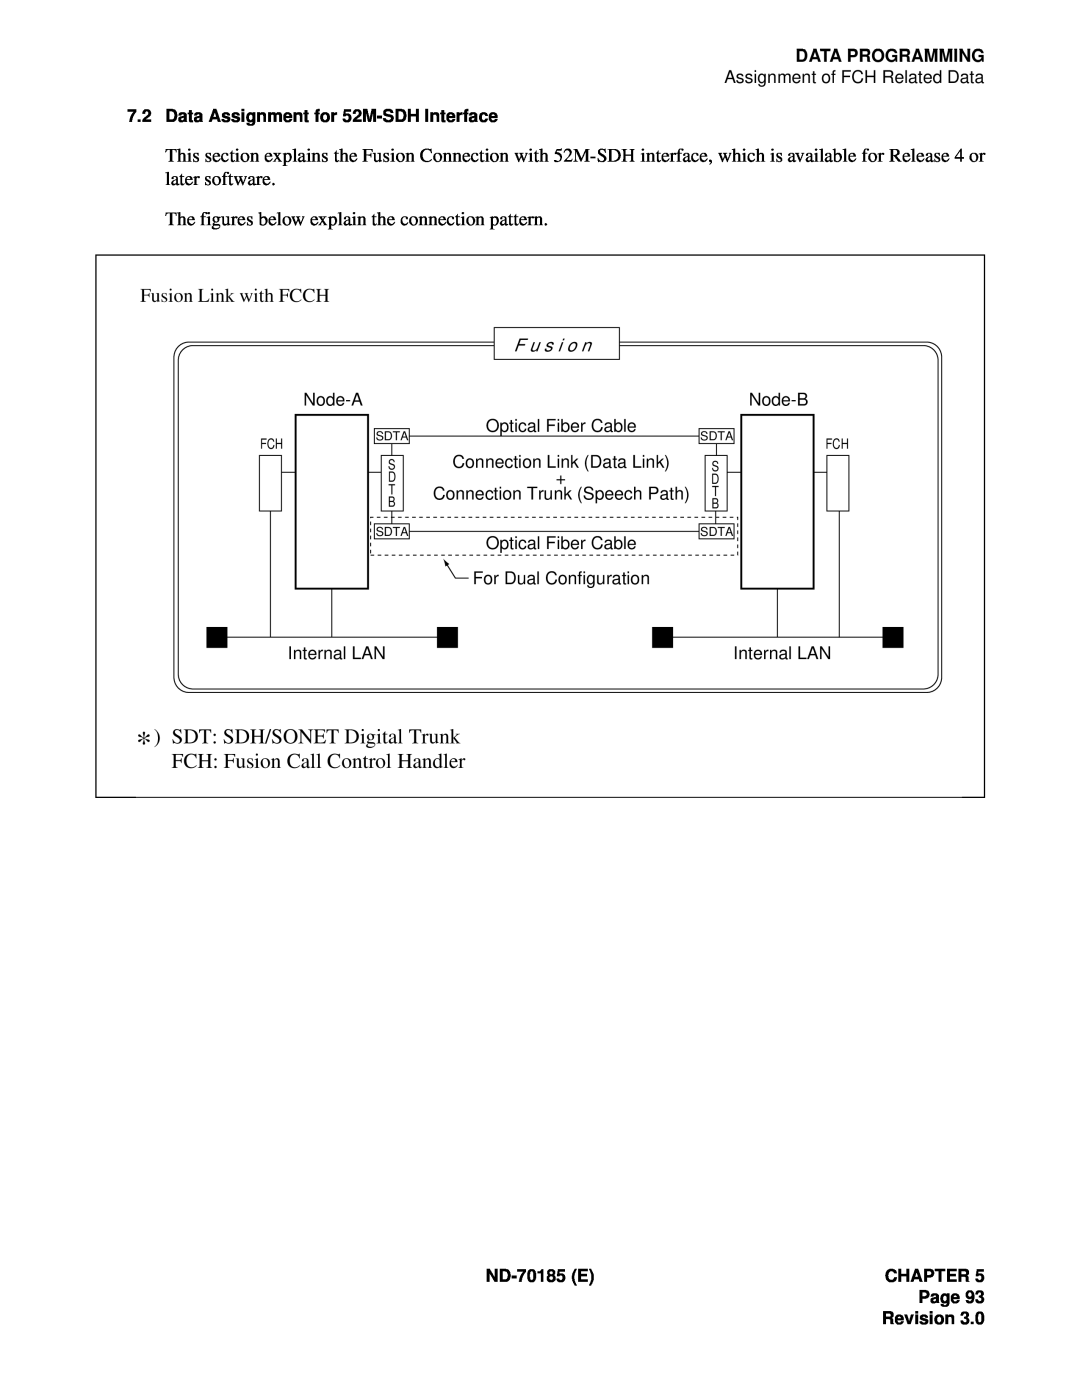 NEC NEAX2400 system manual SDT SDH/SONET Digital Trunk, FCH: Fusion Call Control Handler, Data Programming 